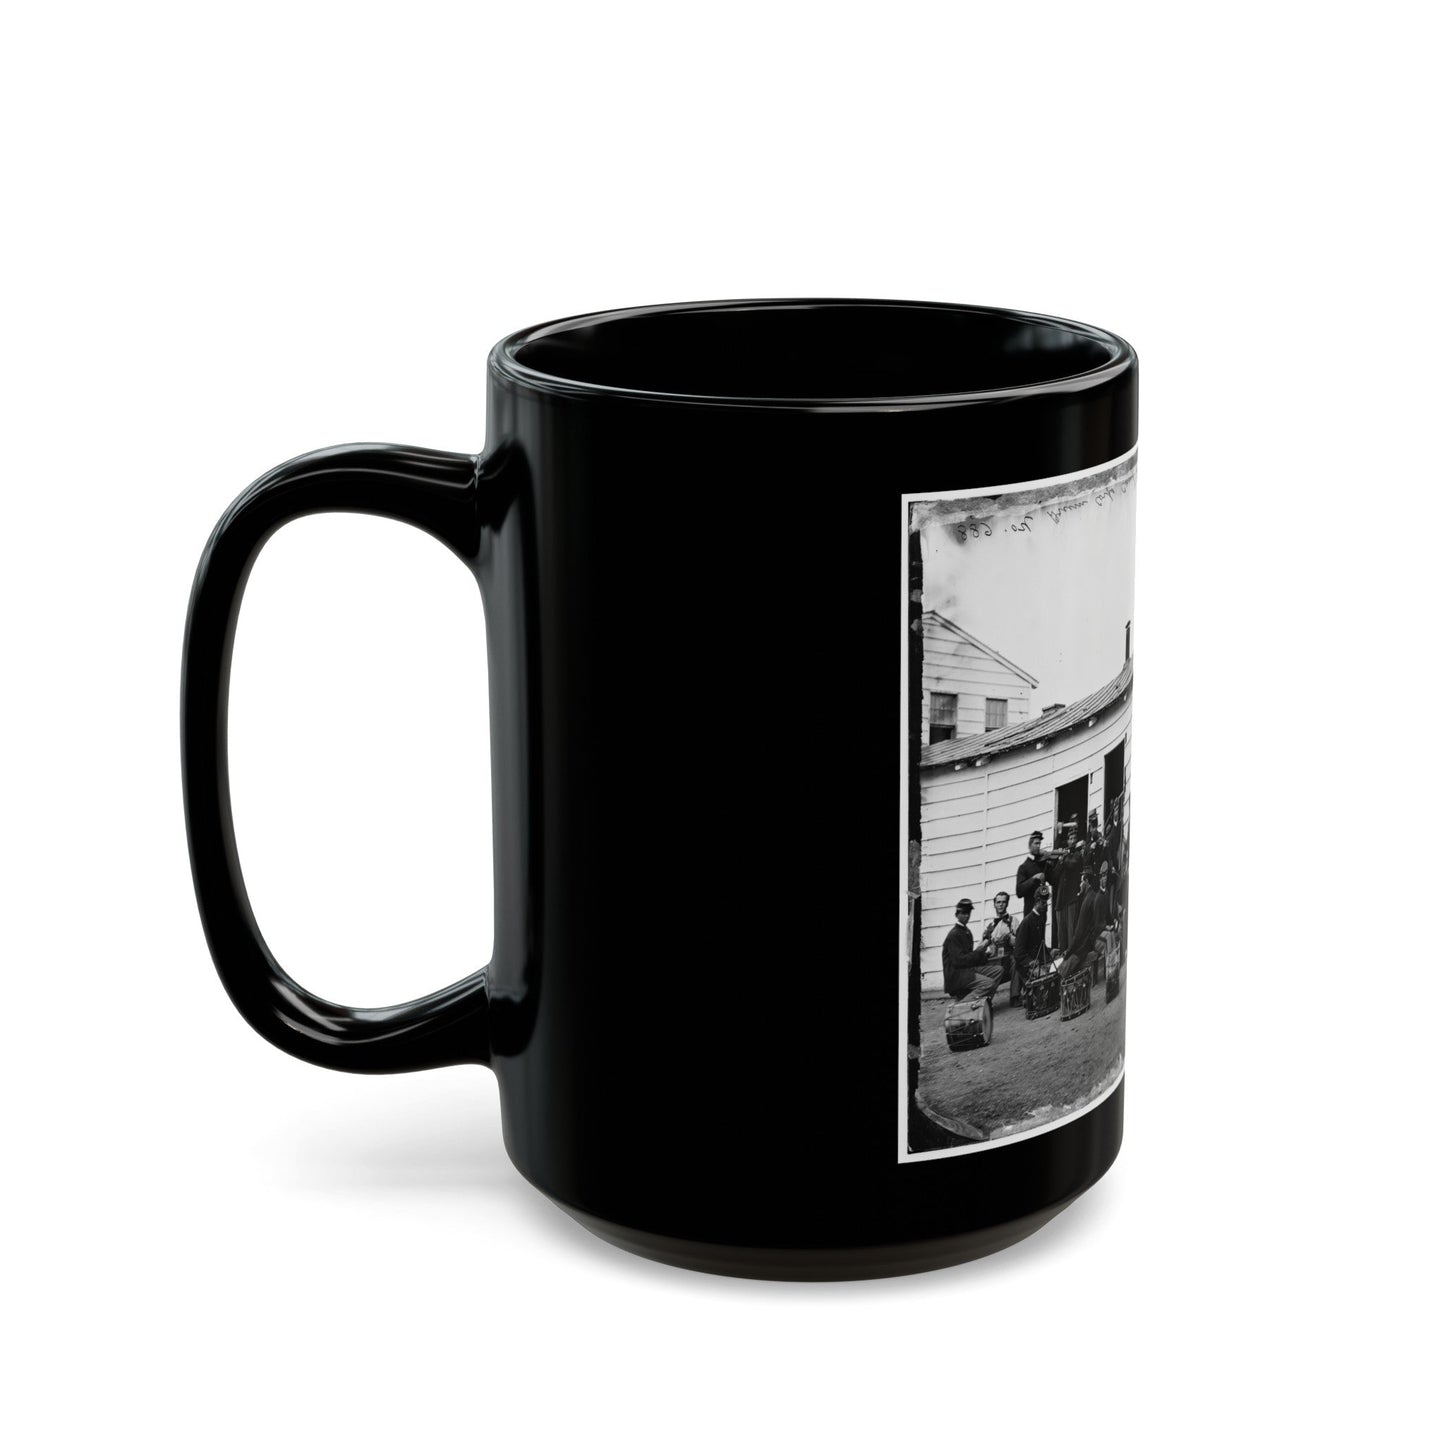 Washington, D.C. Drum Corps Of 10th Veteran Reserve Corps At Leisure (U.S. Civil War) Black Coffee Mug